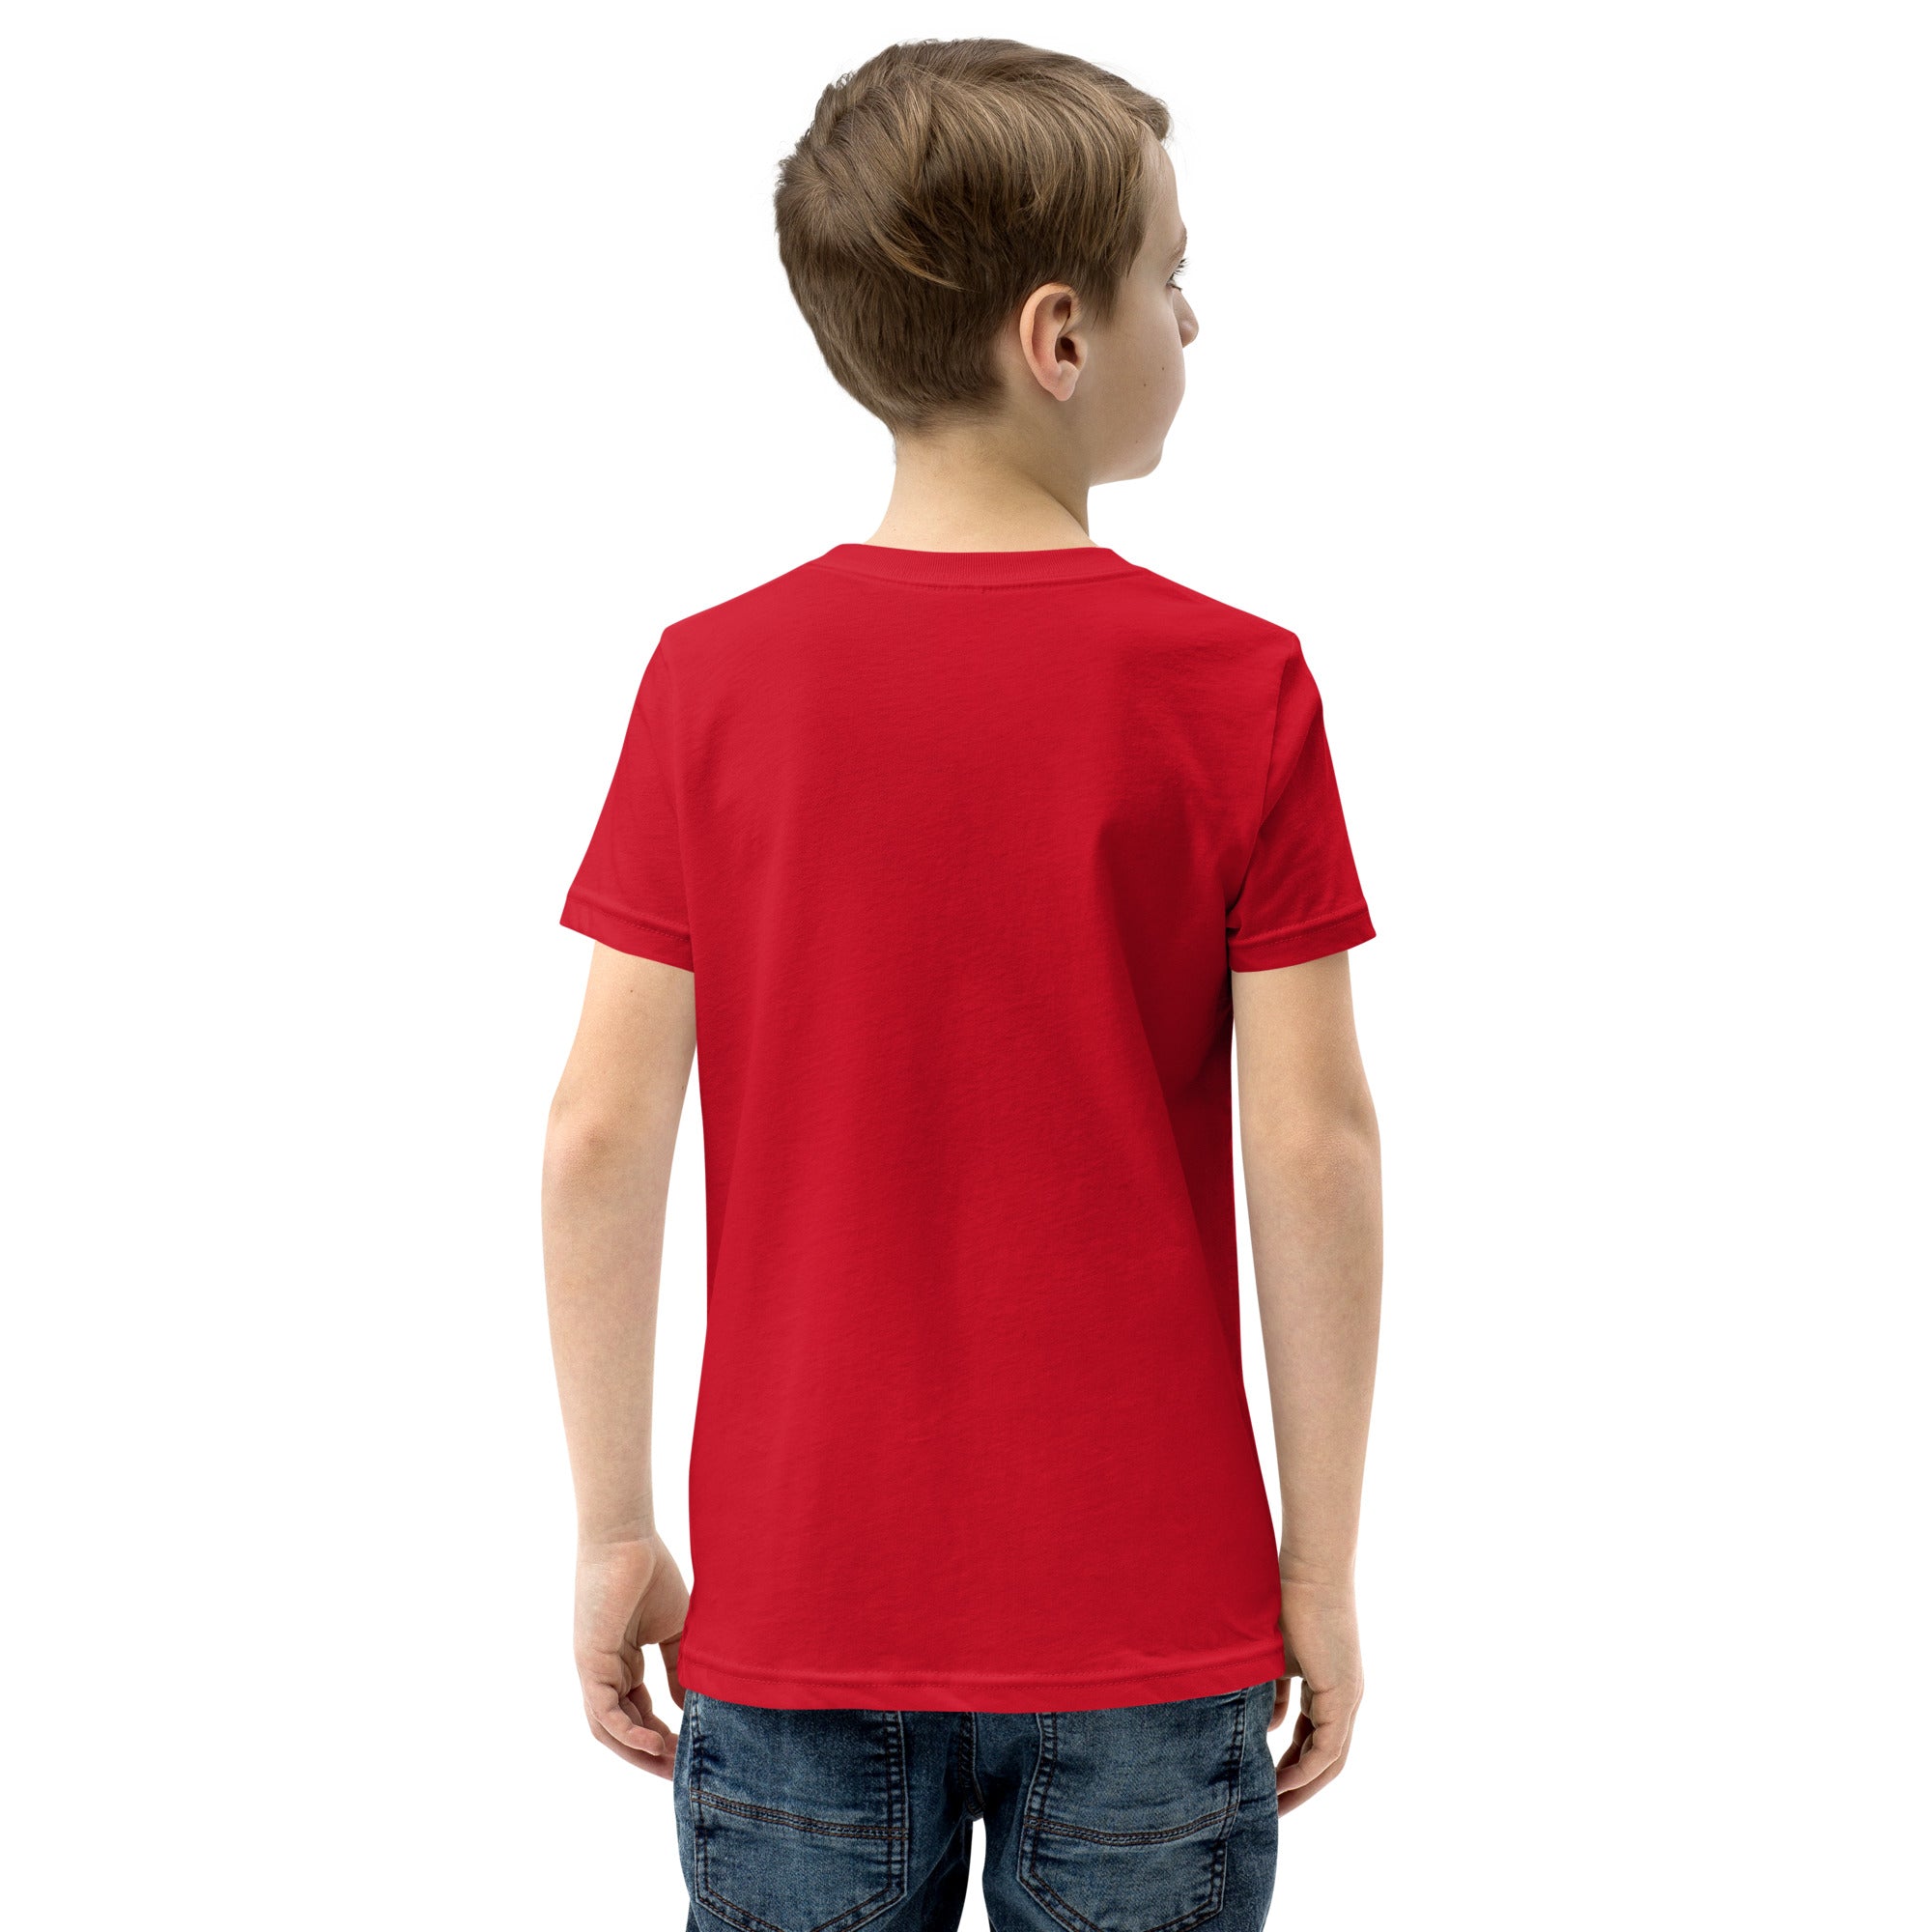 Liberty Logo White - Red Youth Short Sleeve T-Shirt